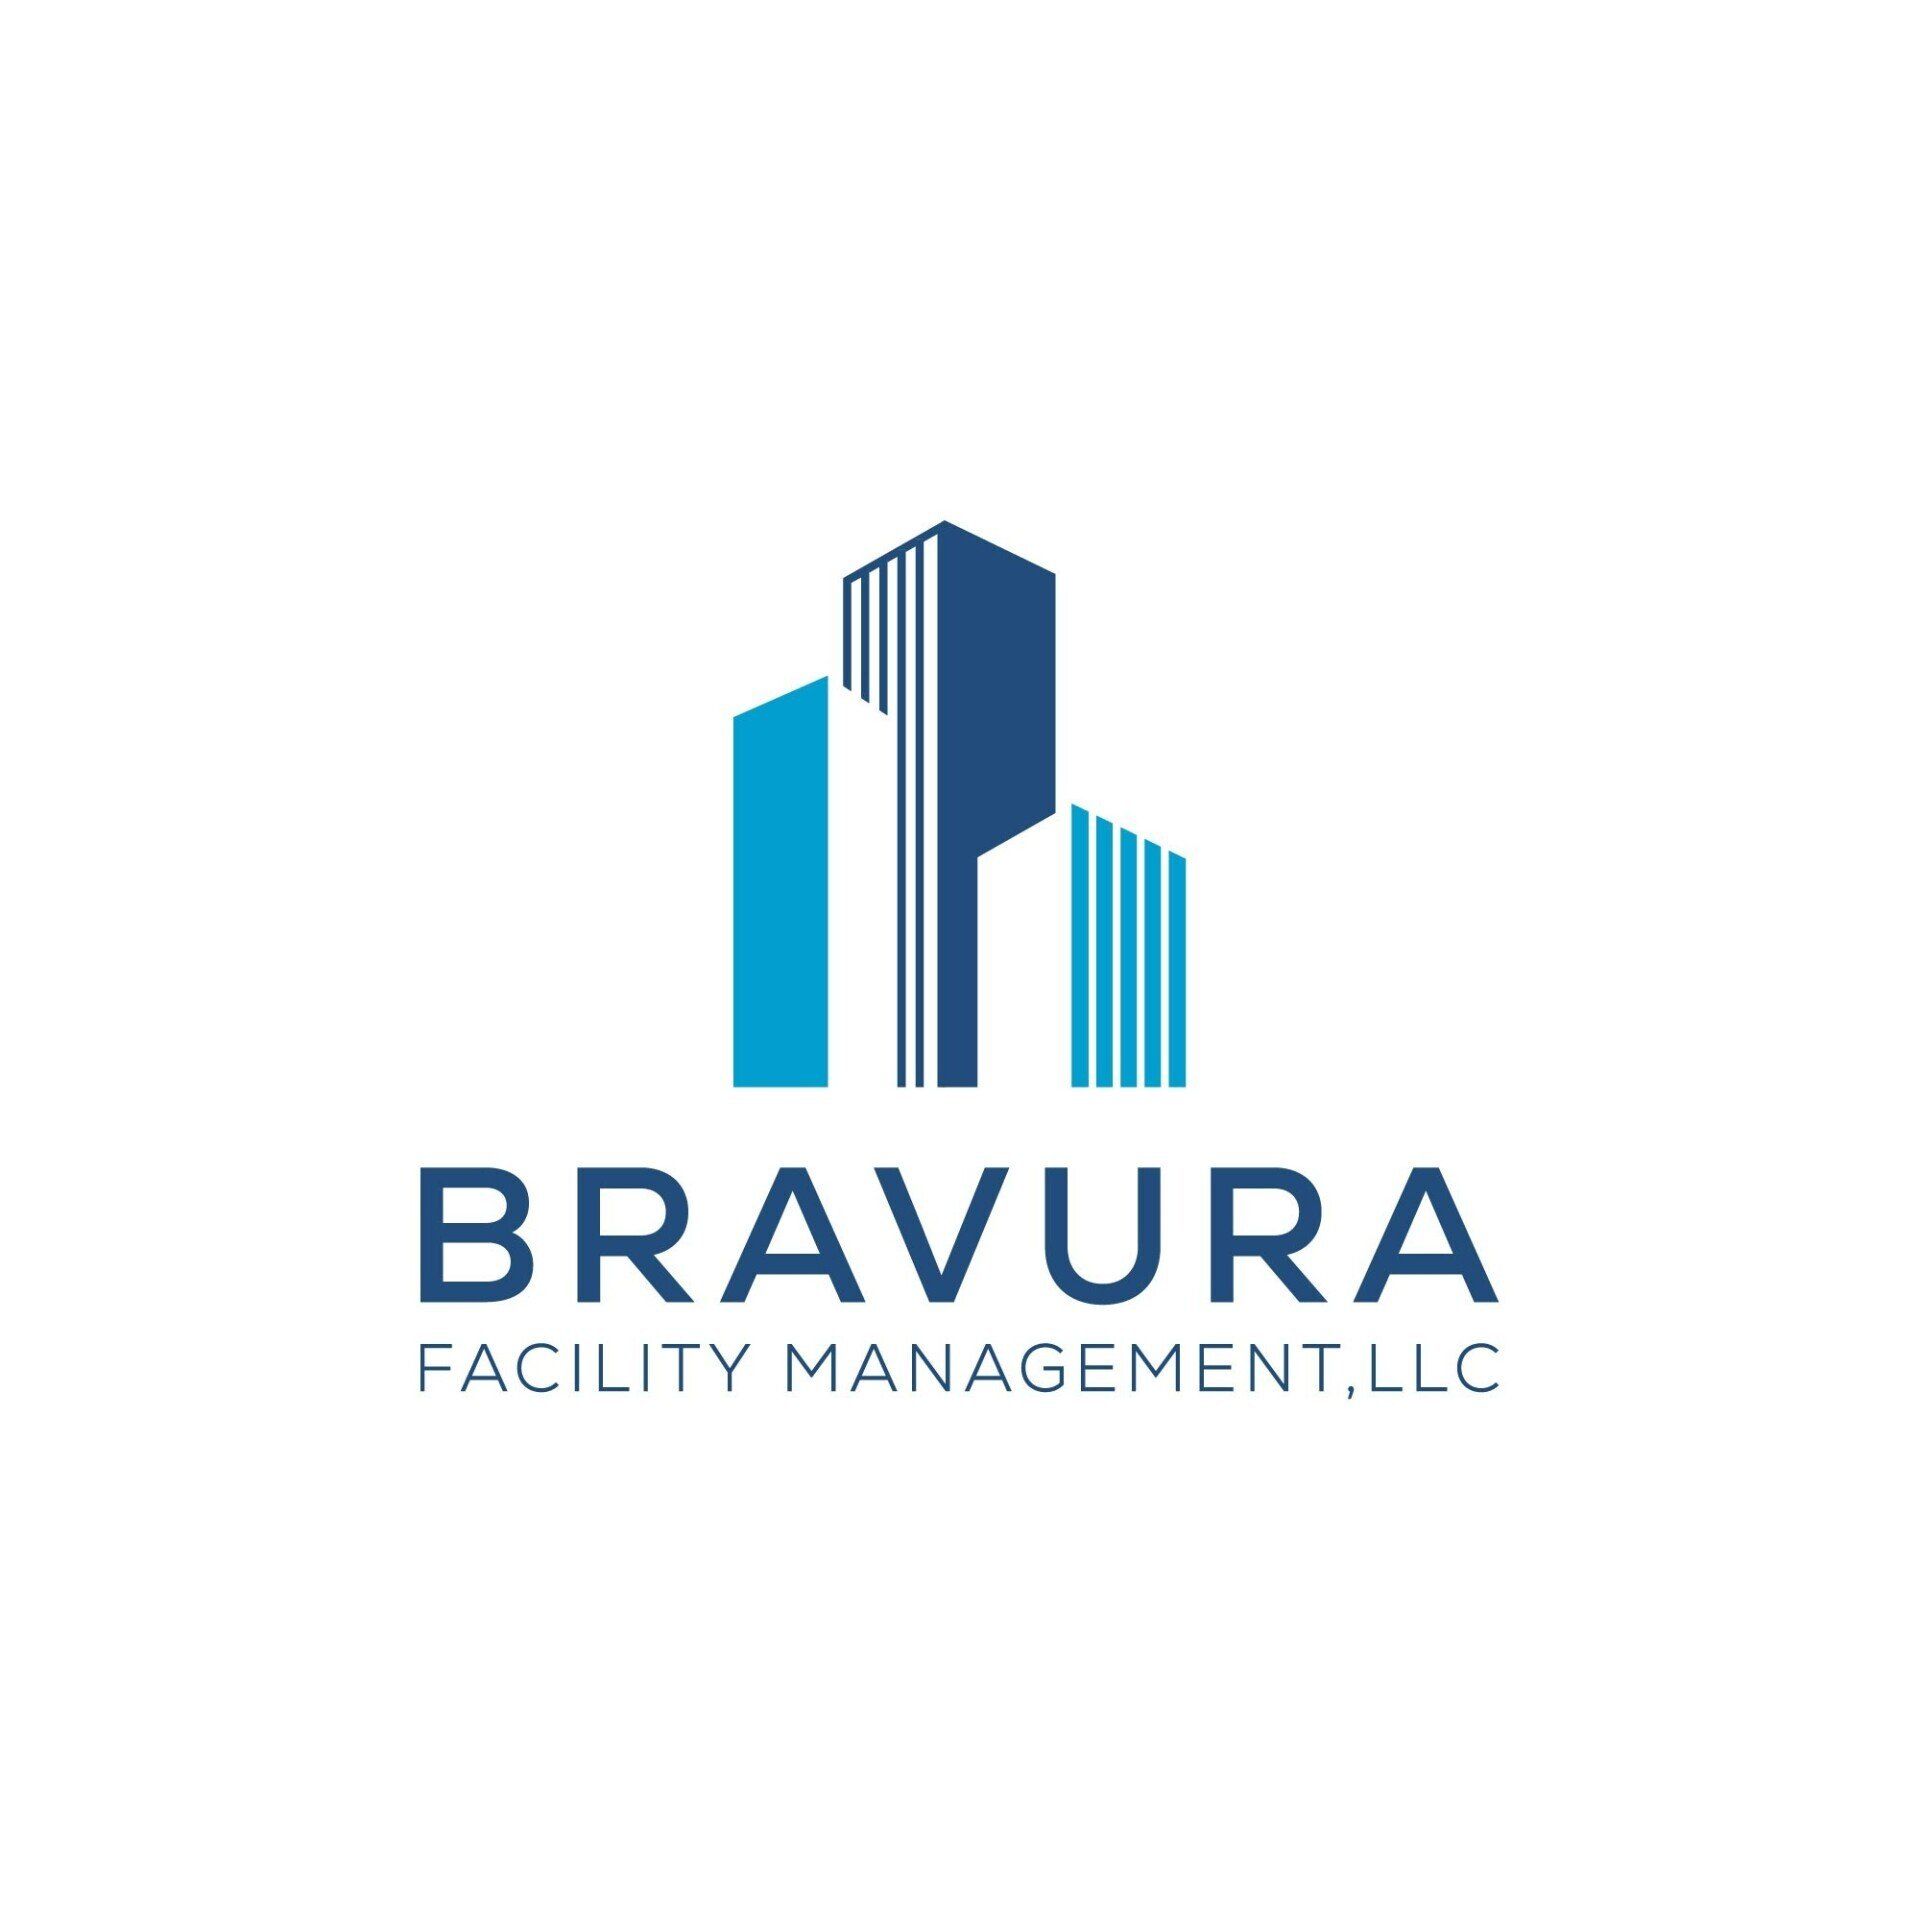 Bravura Facility Management, LLC